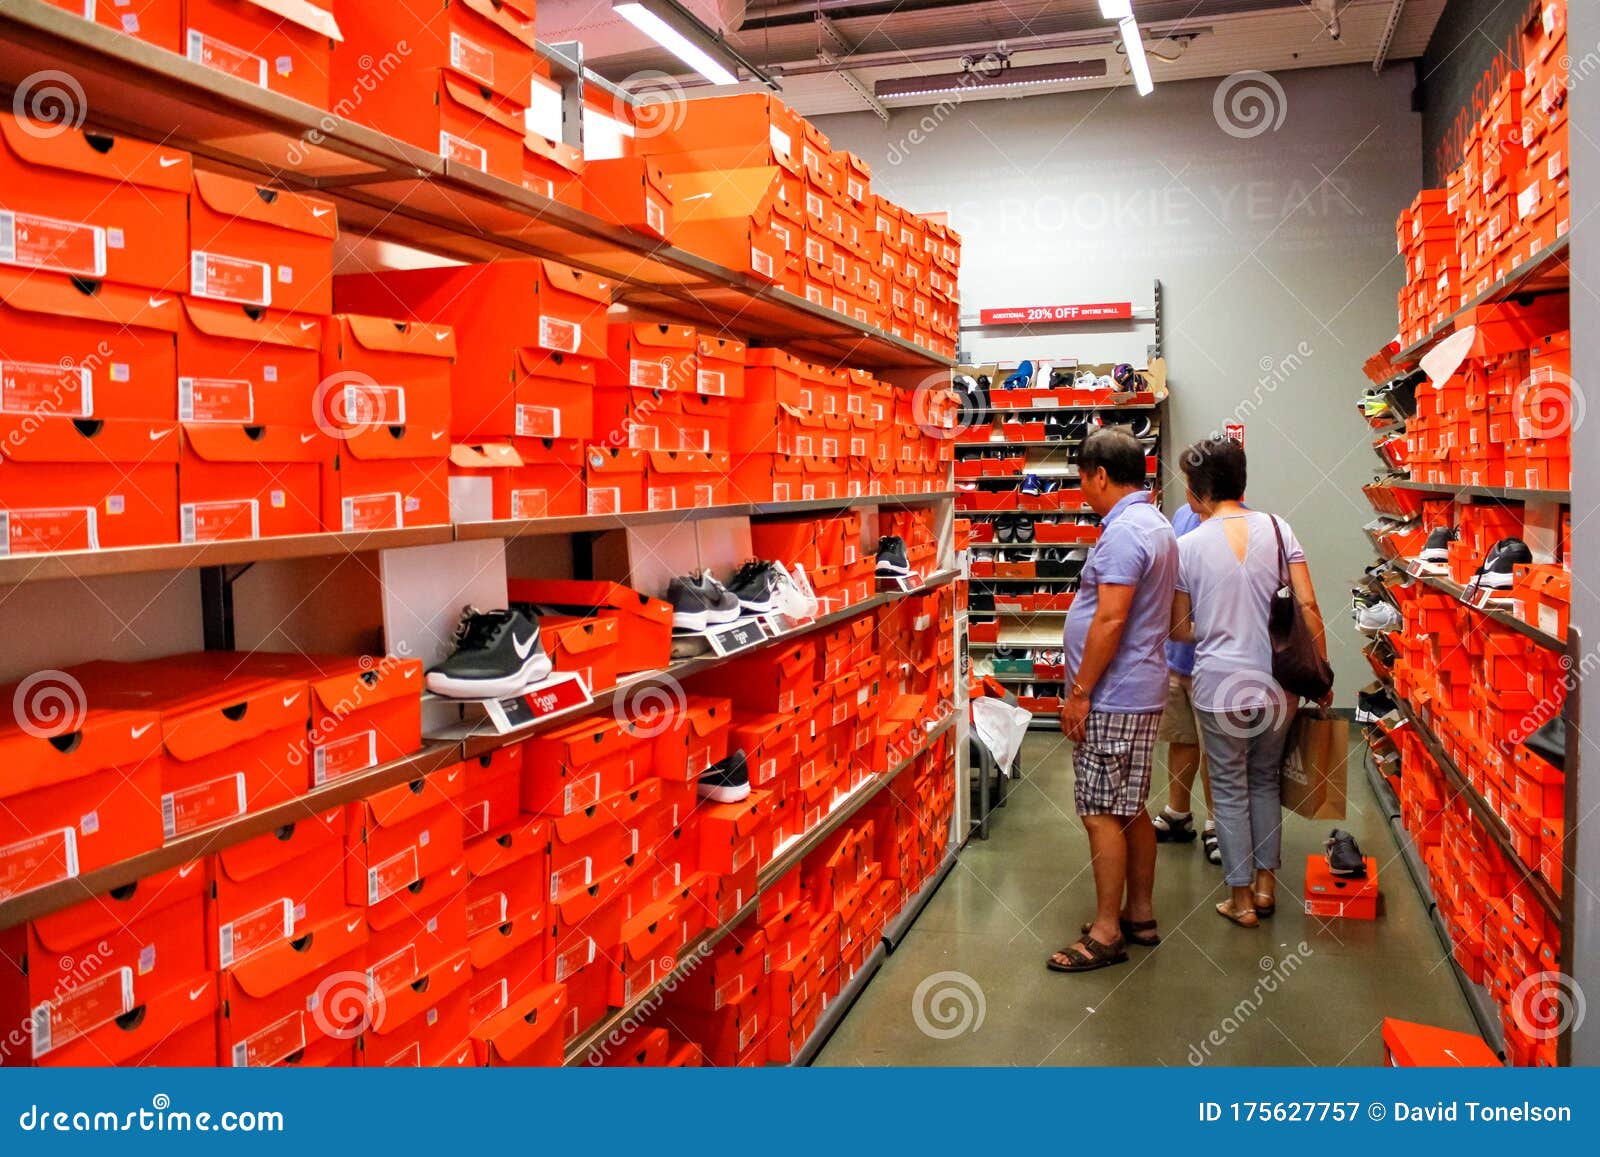 Nike shoe boxes editorial photography. Image import - 175627757